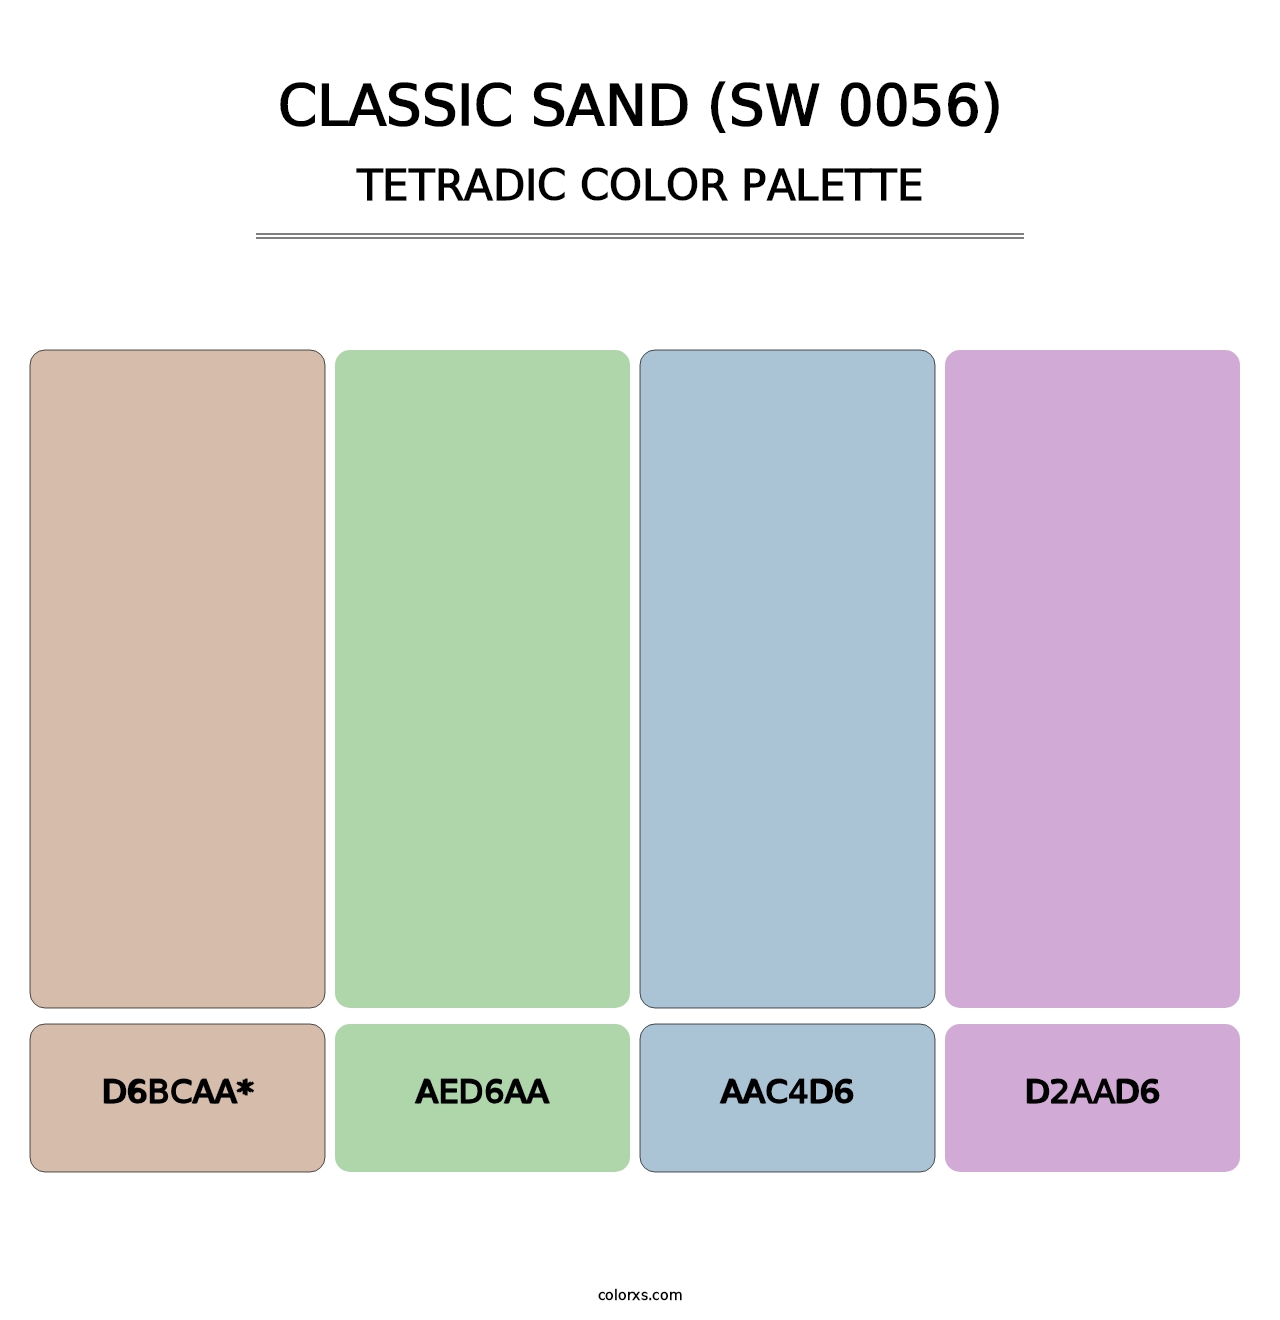 Classic Sand (SW 0056) - Tetradic Color Palette